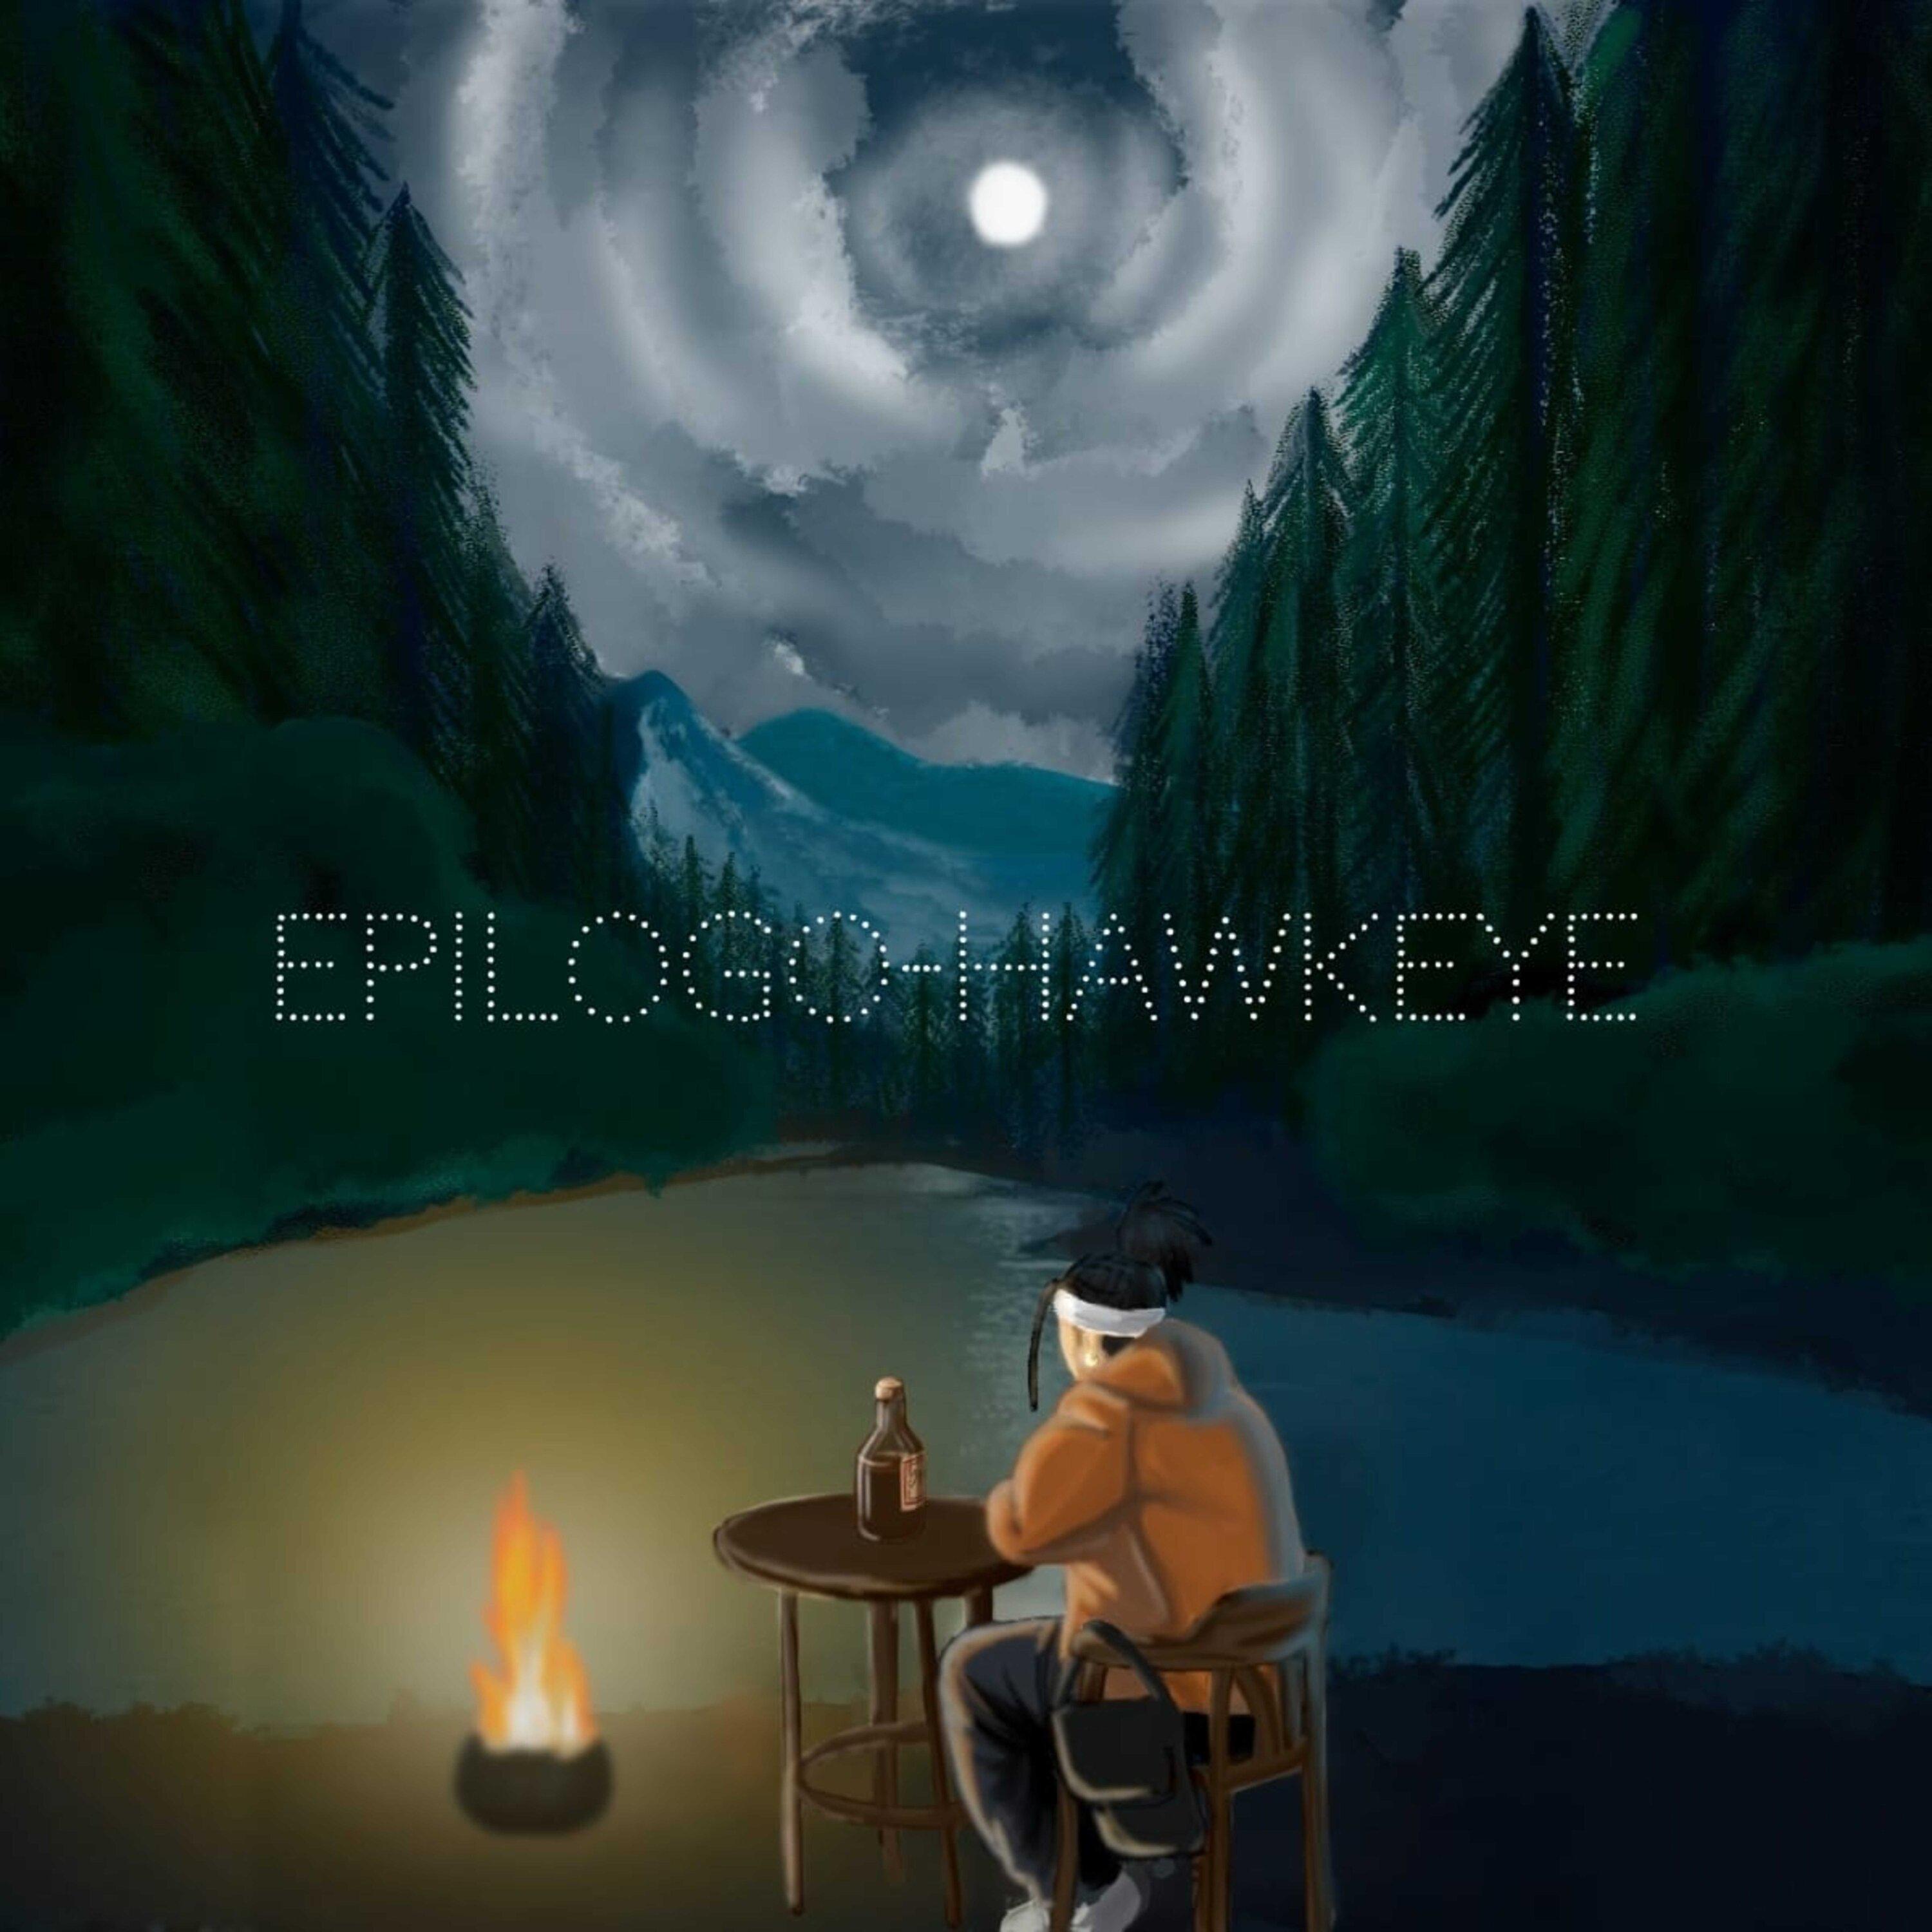 Hawkeye - Epilogo